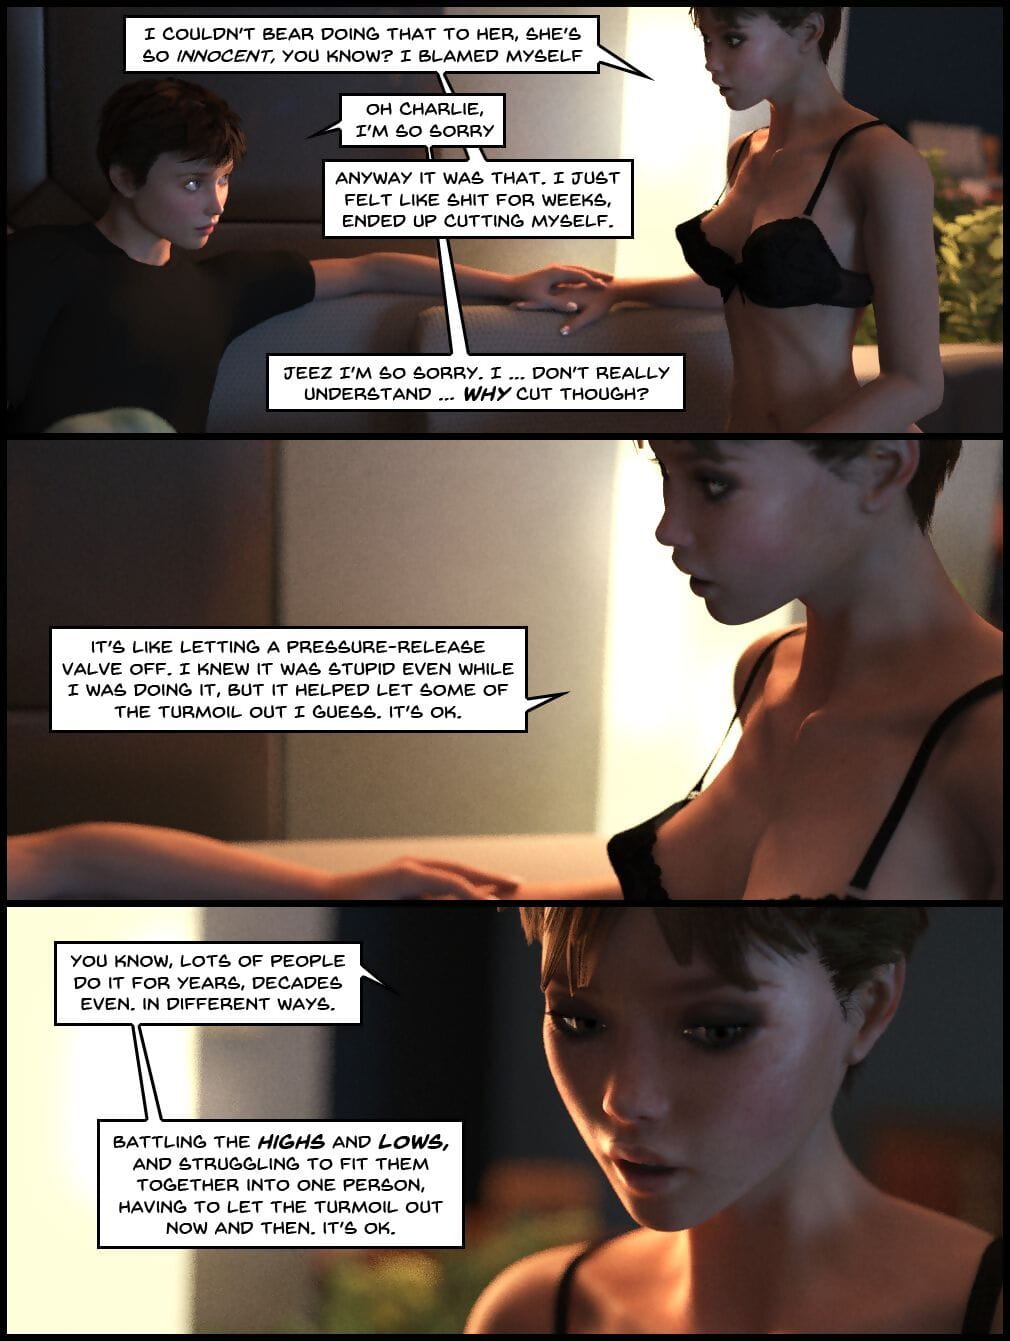 Sindy アンナ ジョーンズ ~ の リチウム comic. 02: 団体 に 軌道 部分 3 page 1